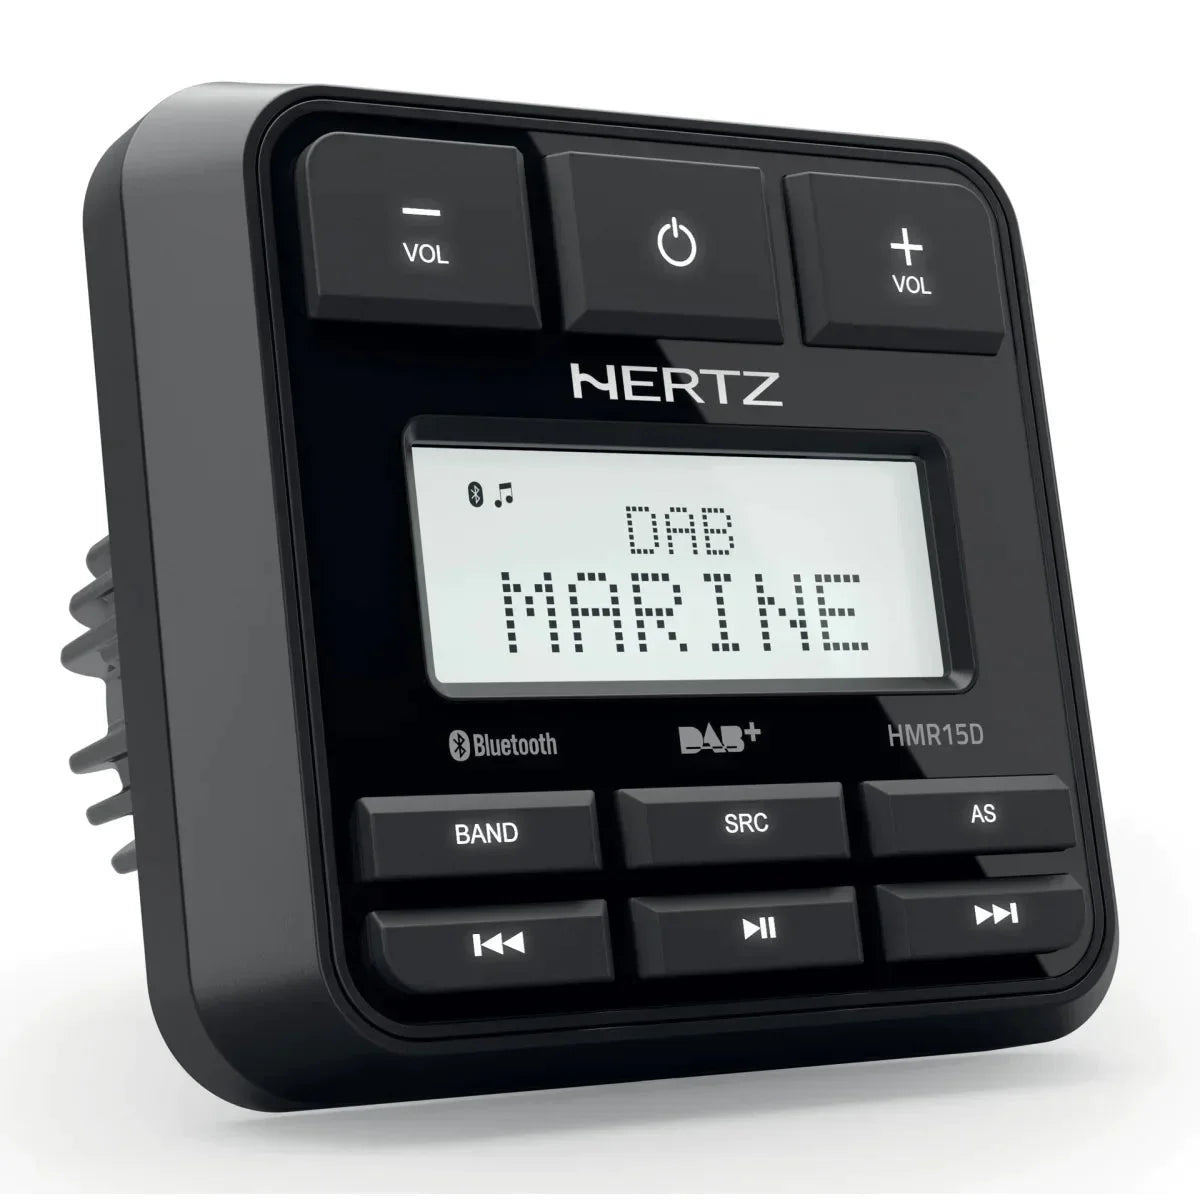 Hertz-HMR 15D-Multi-Media-Receiver-Masori.de